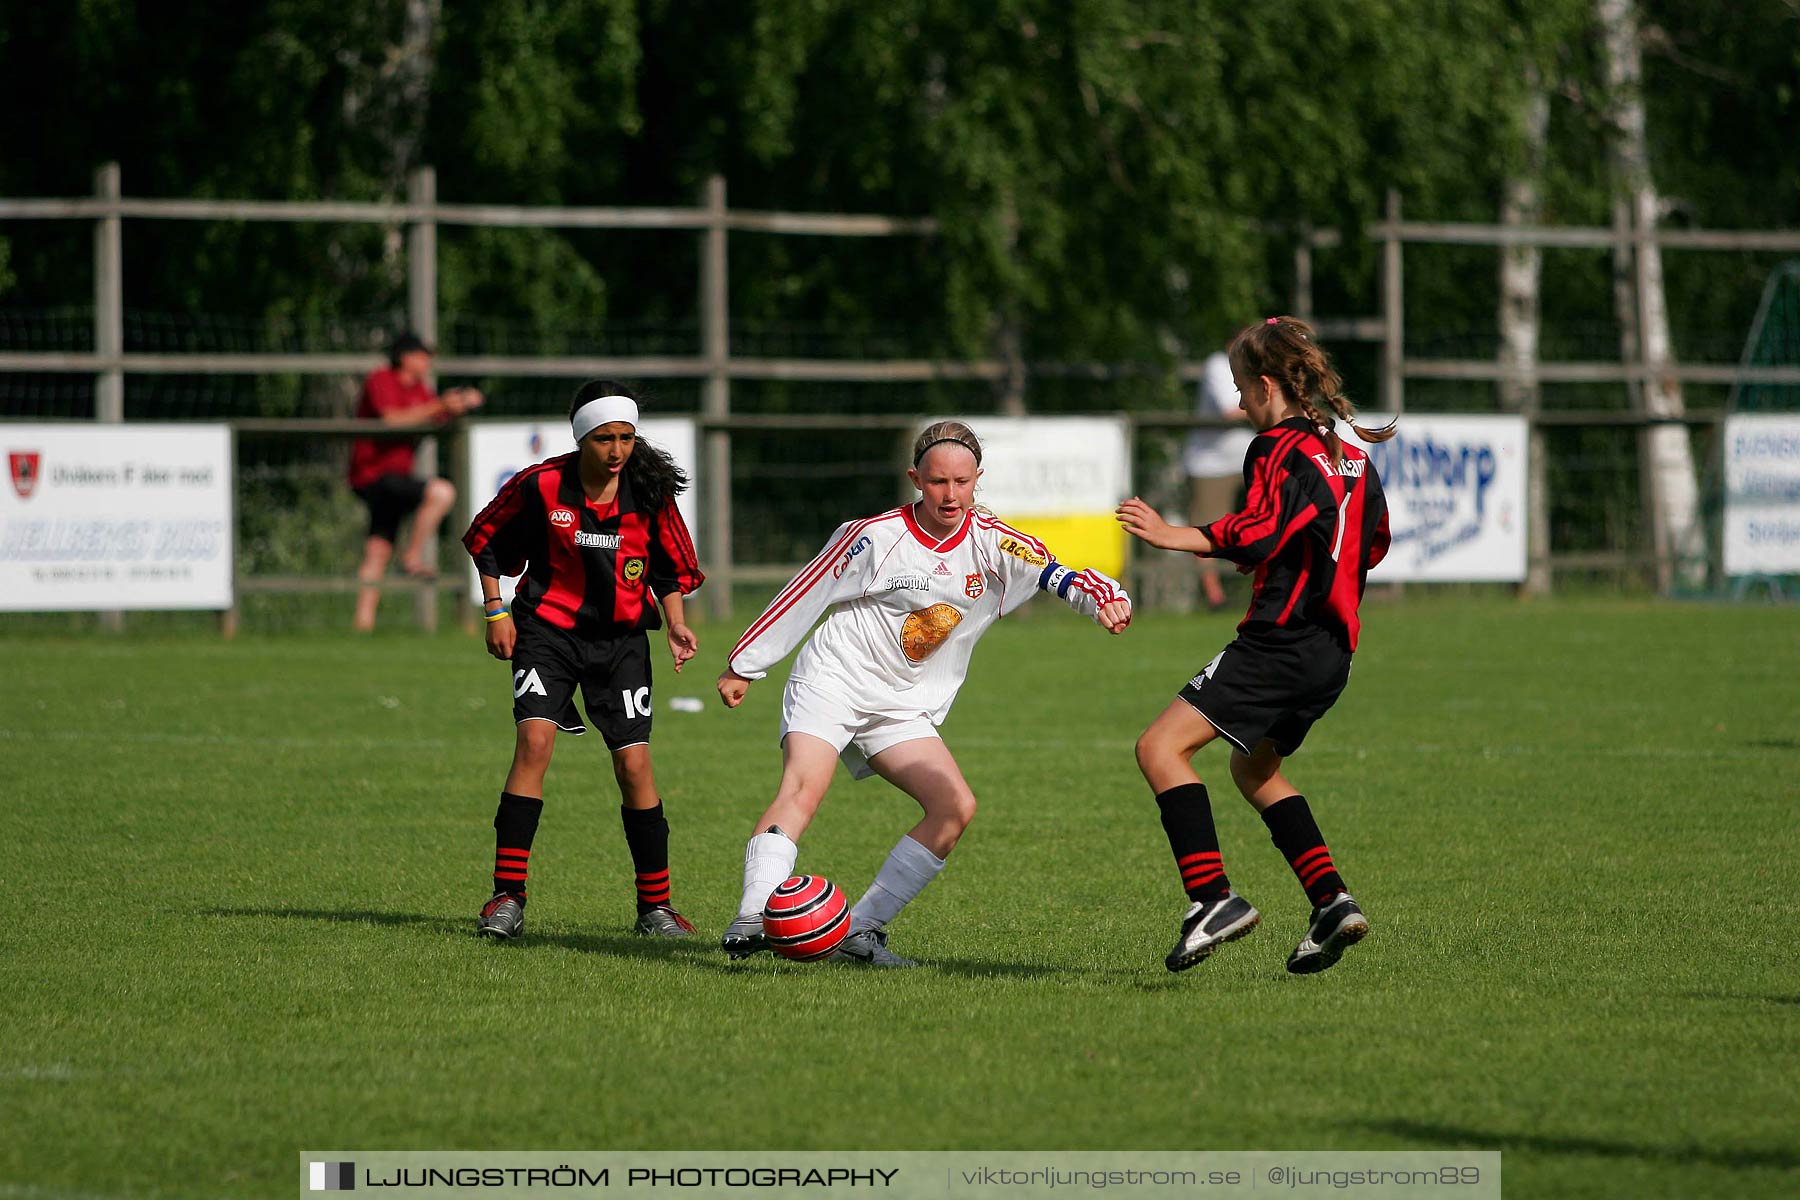 Ulvacupen 2006,mix,Åbrovallen,Ulvåker,Sverige,Fotboll,,2006,147370